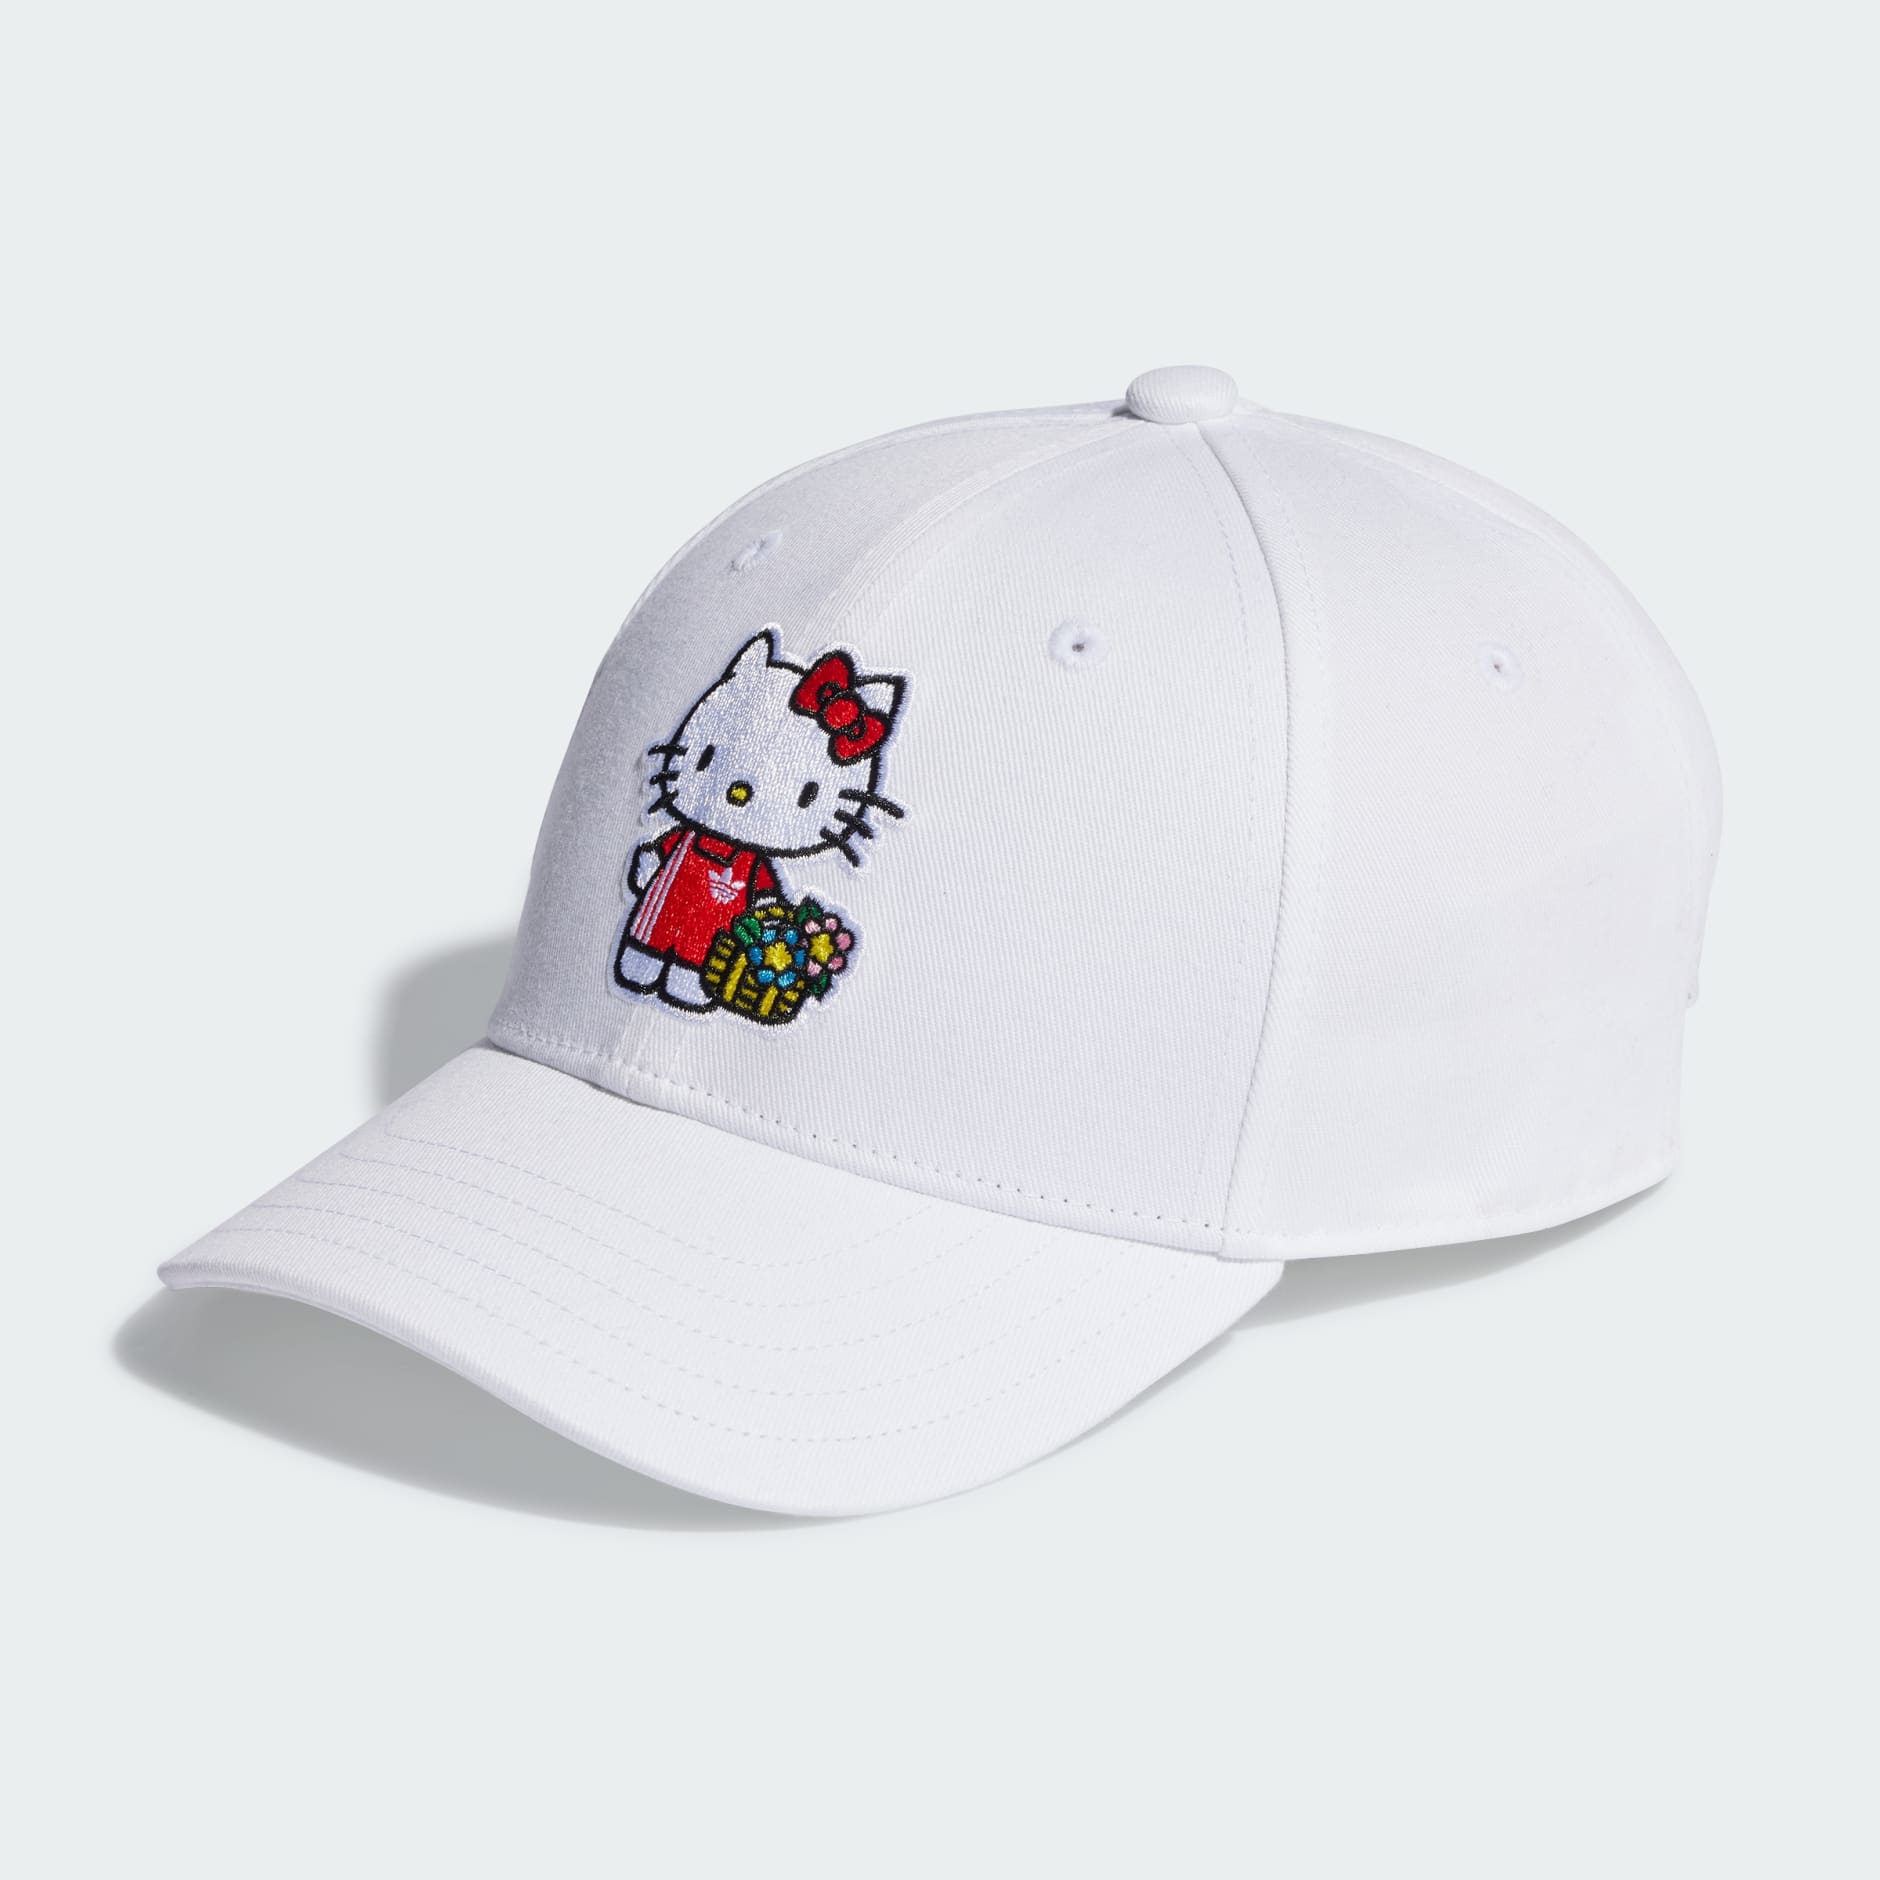 adidas adidas Originals x Hello Kitty Baseball Cap - White | adidas LK